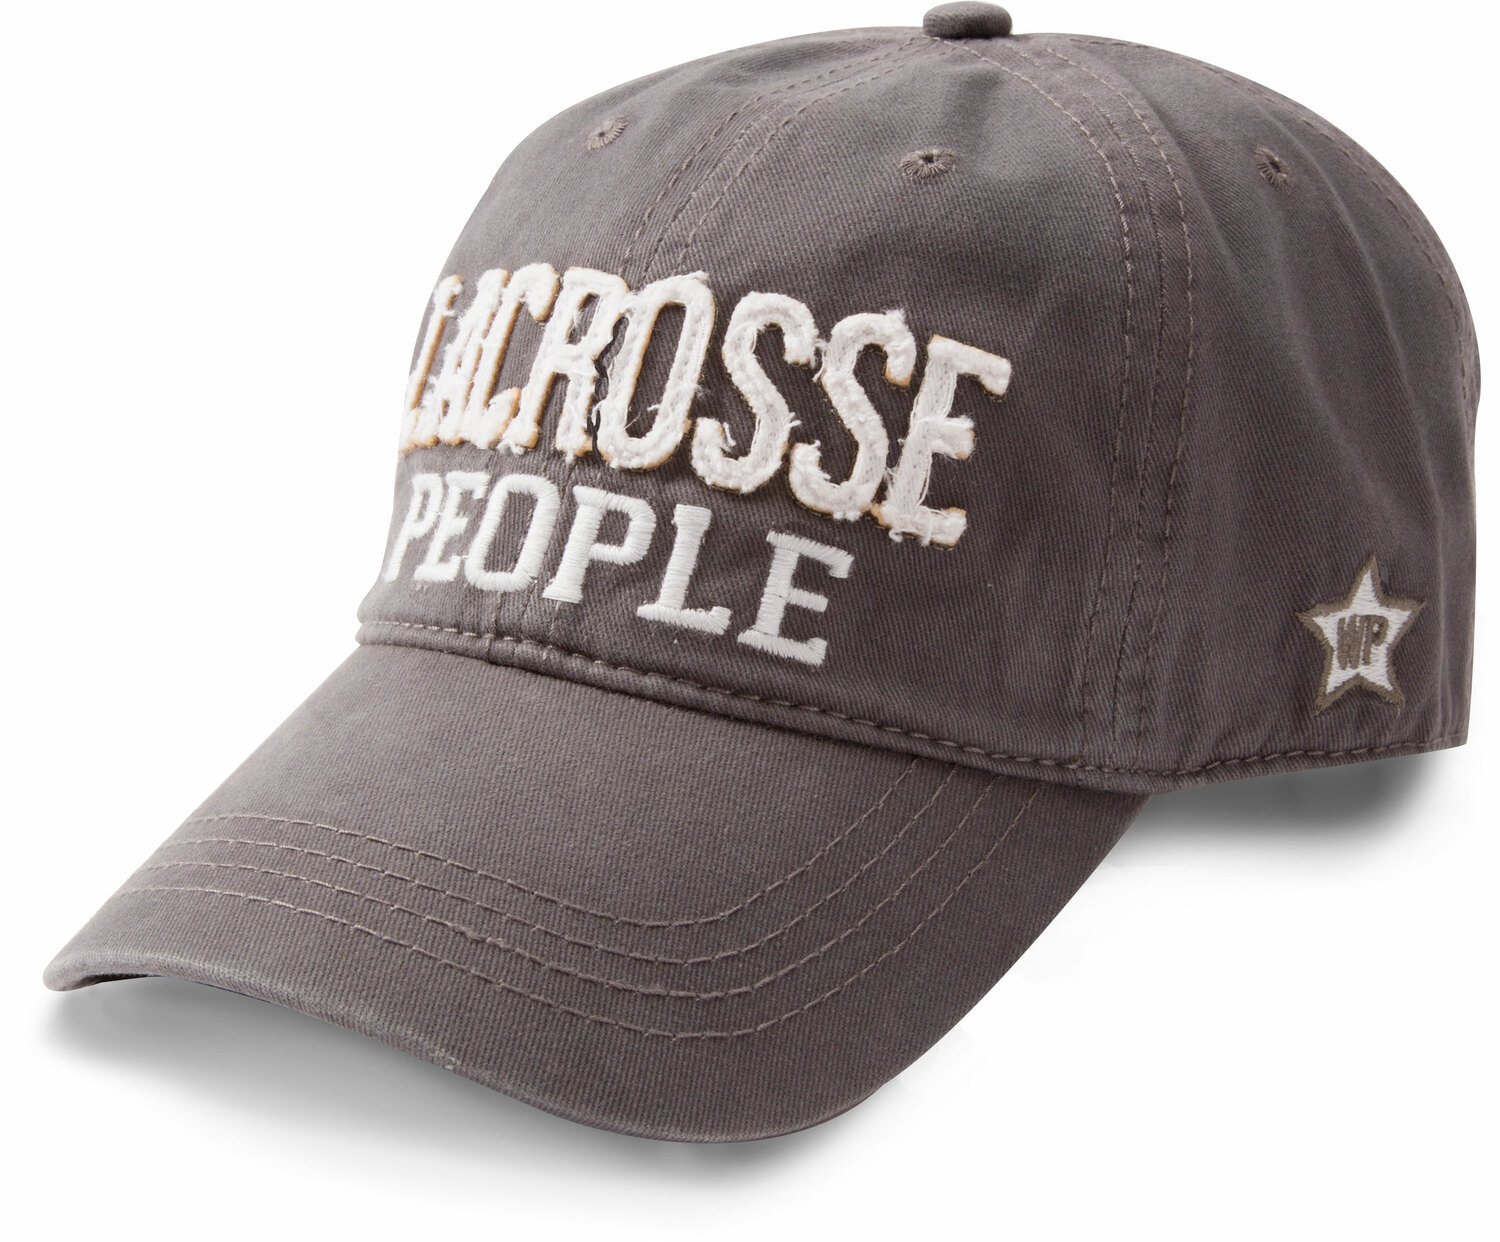 Lacrosse People by We People - Lacrosse People - Dark Gray Adjustable Hat